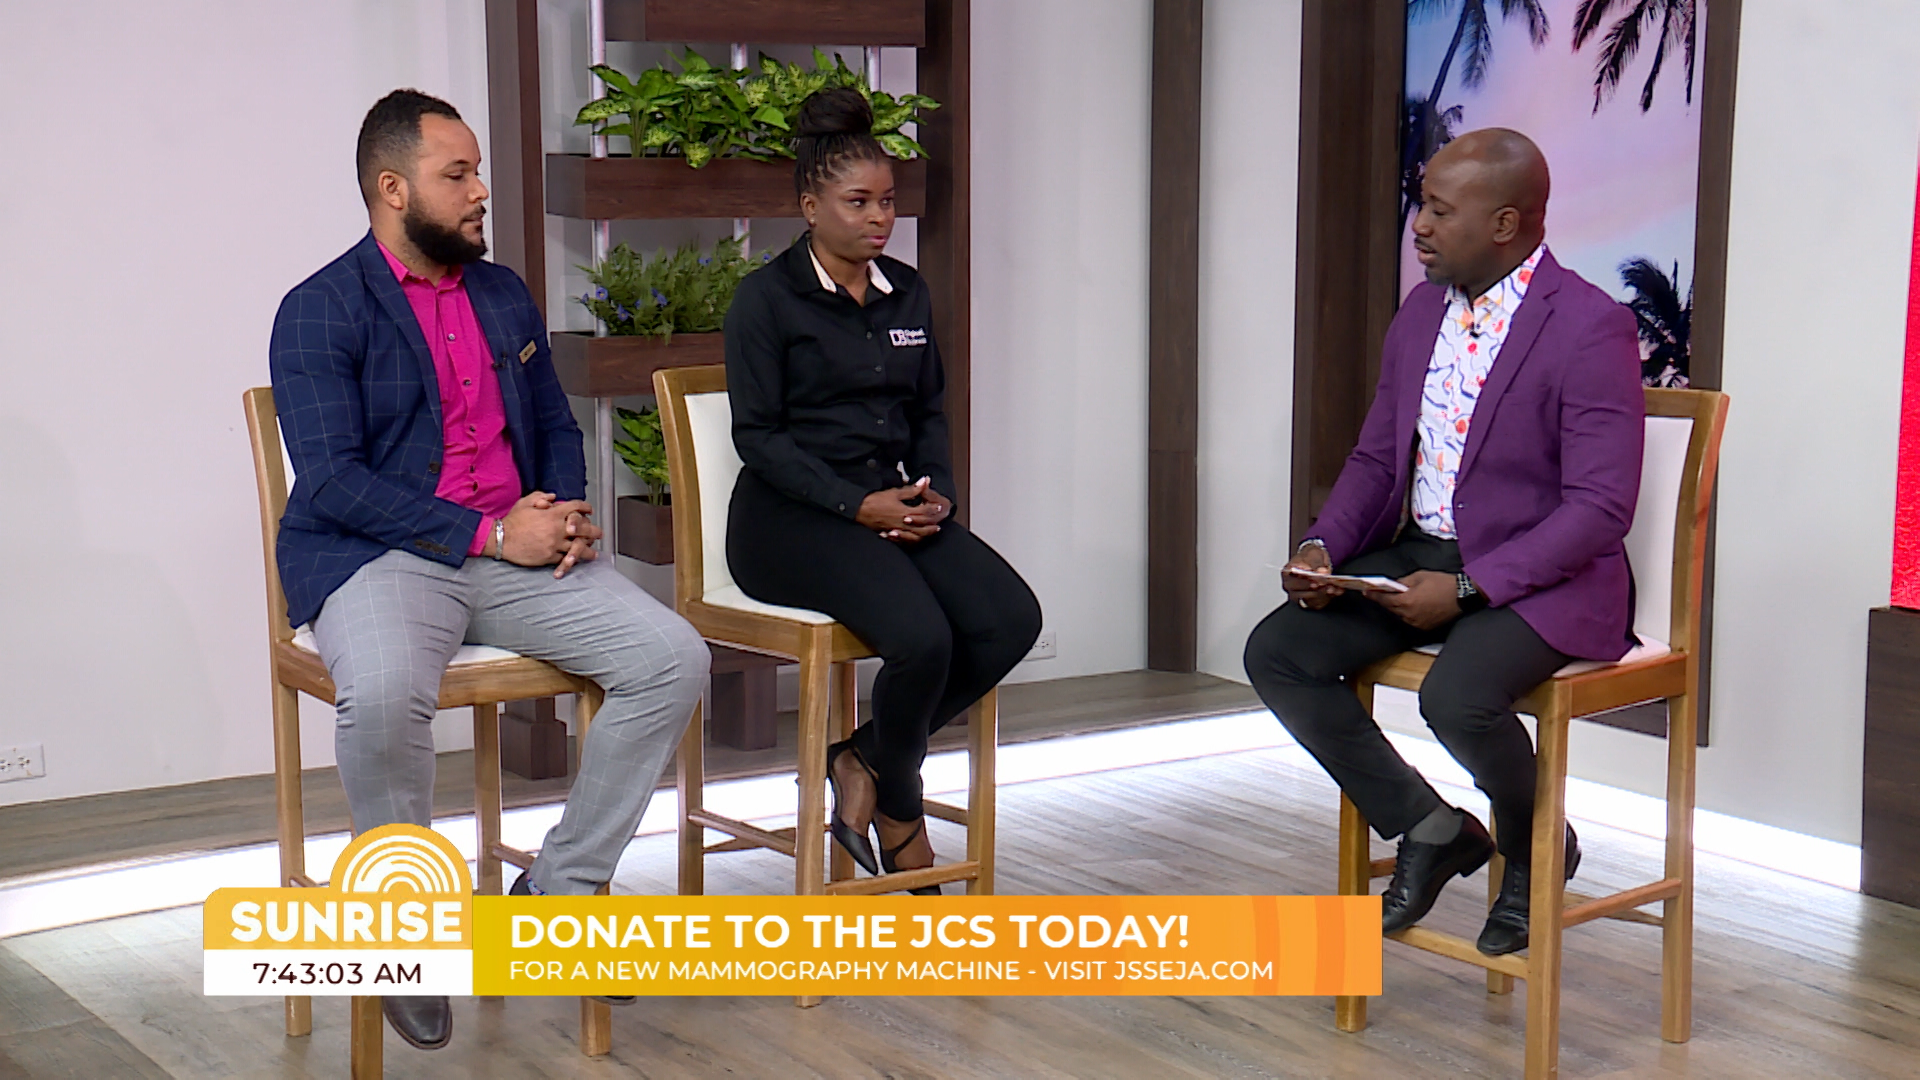 Jamaica Cancer Society Asks for Donation